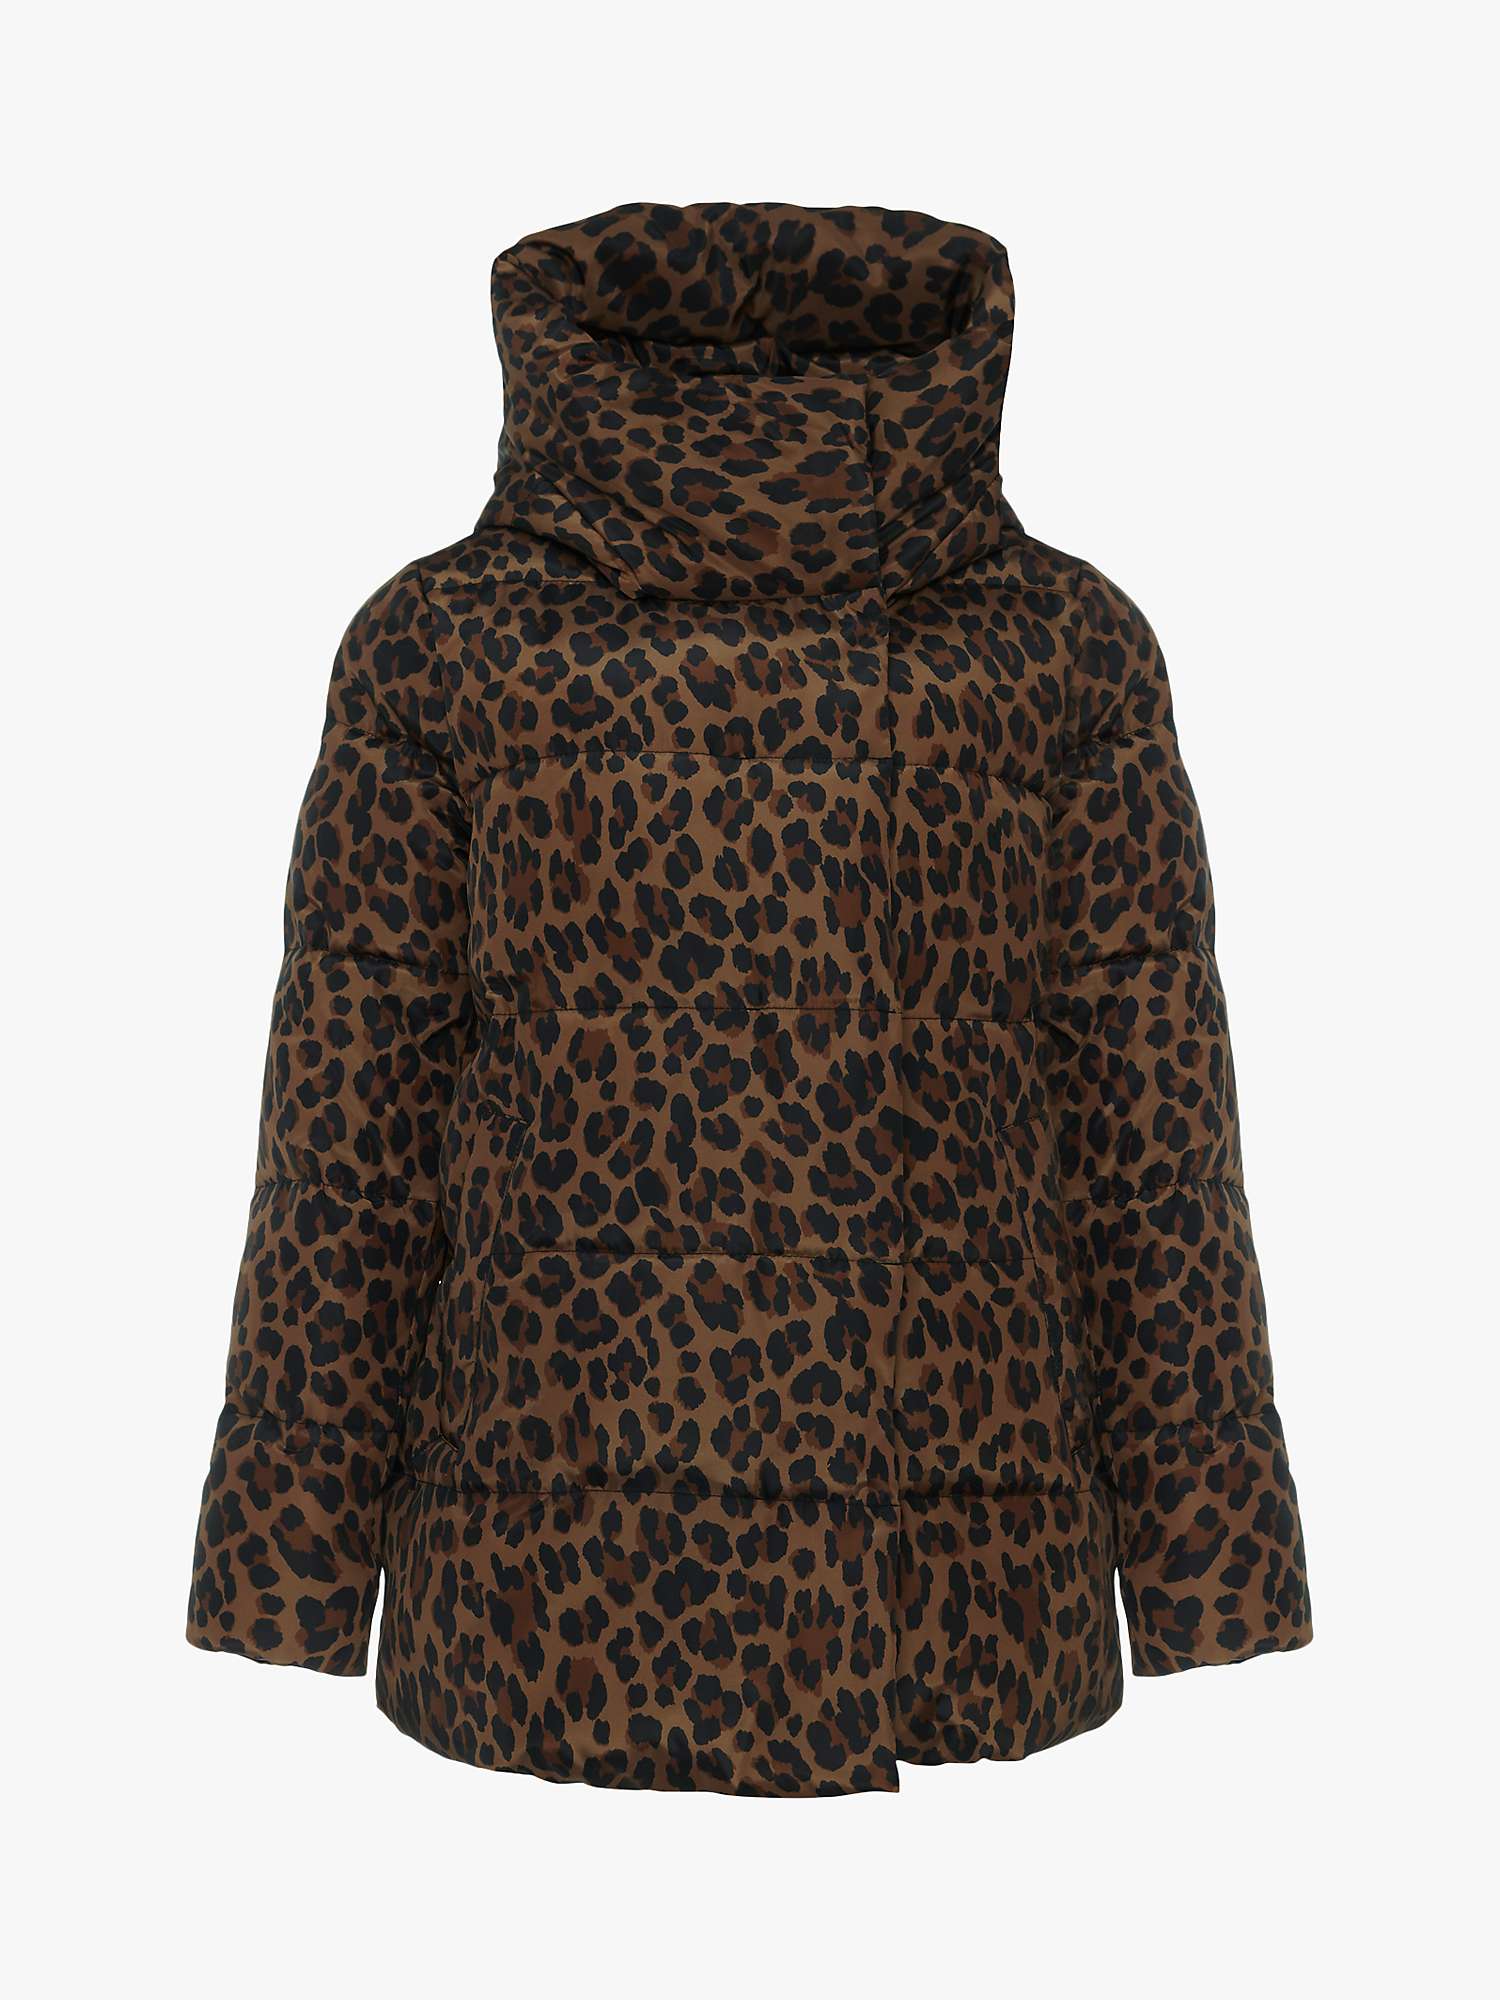 Hobbs Heather Leopard Print Puffer Jacket, Camel at John Lewis & Partners